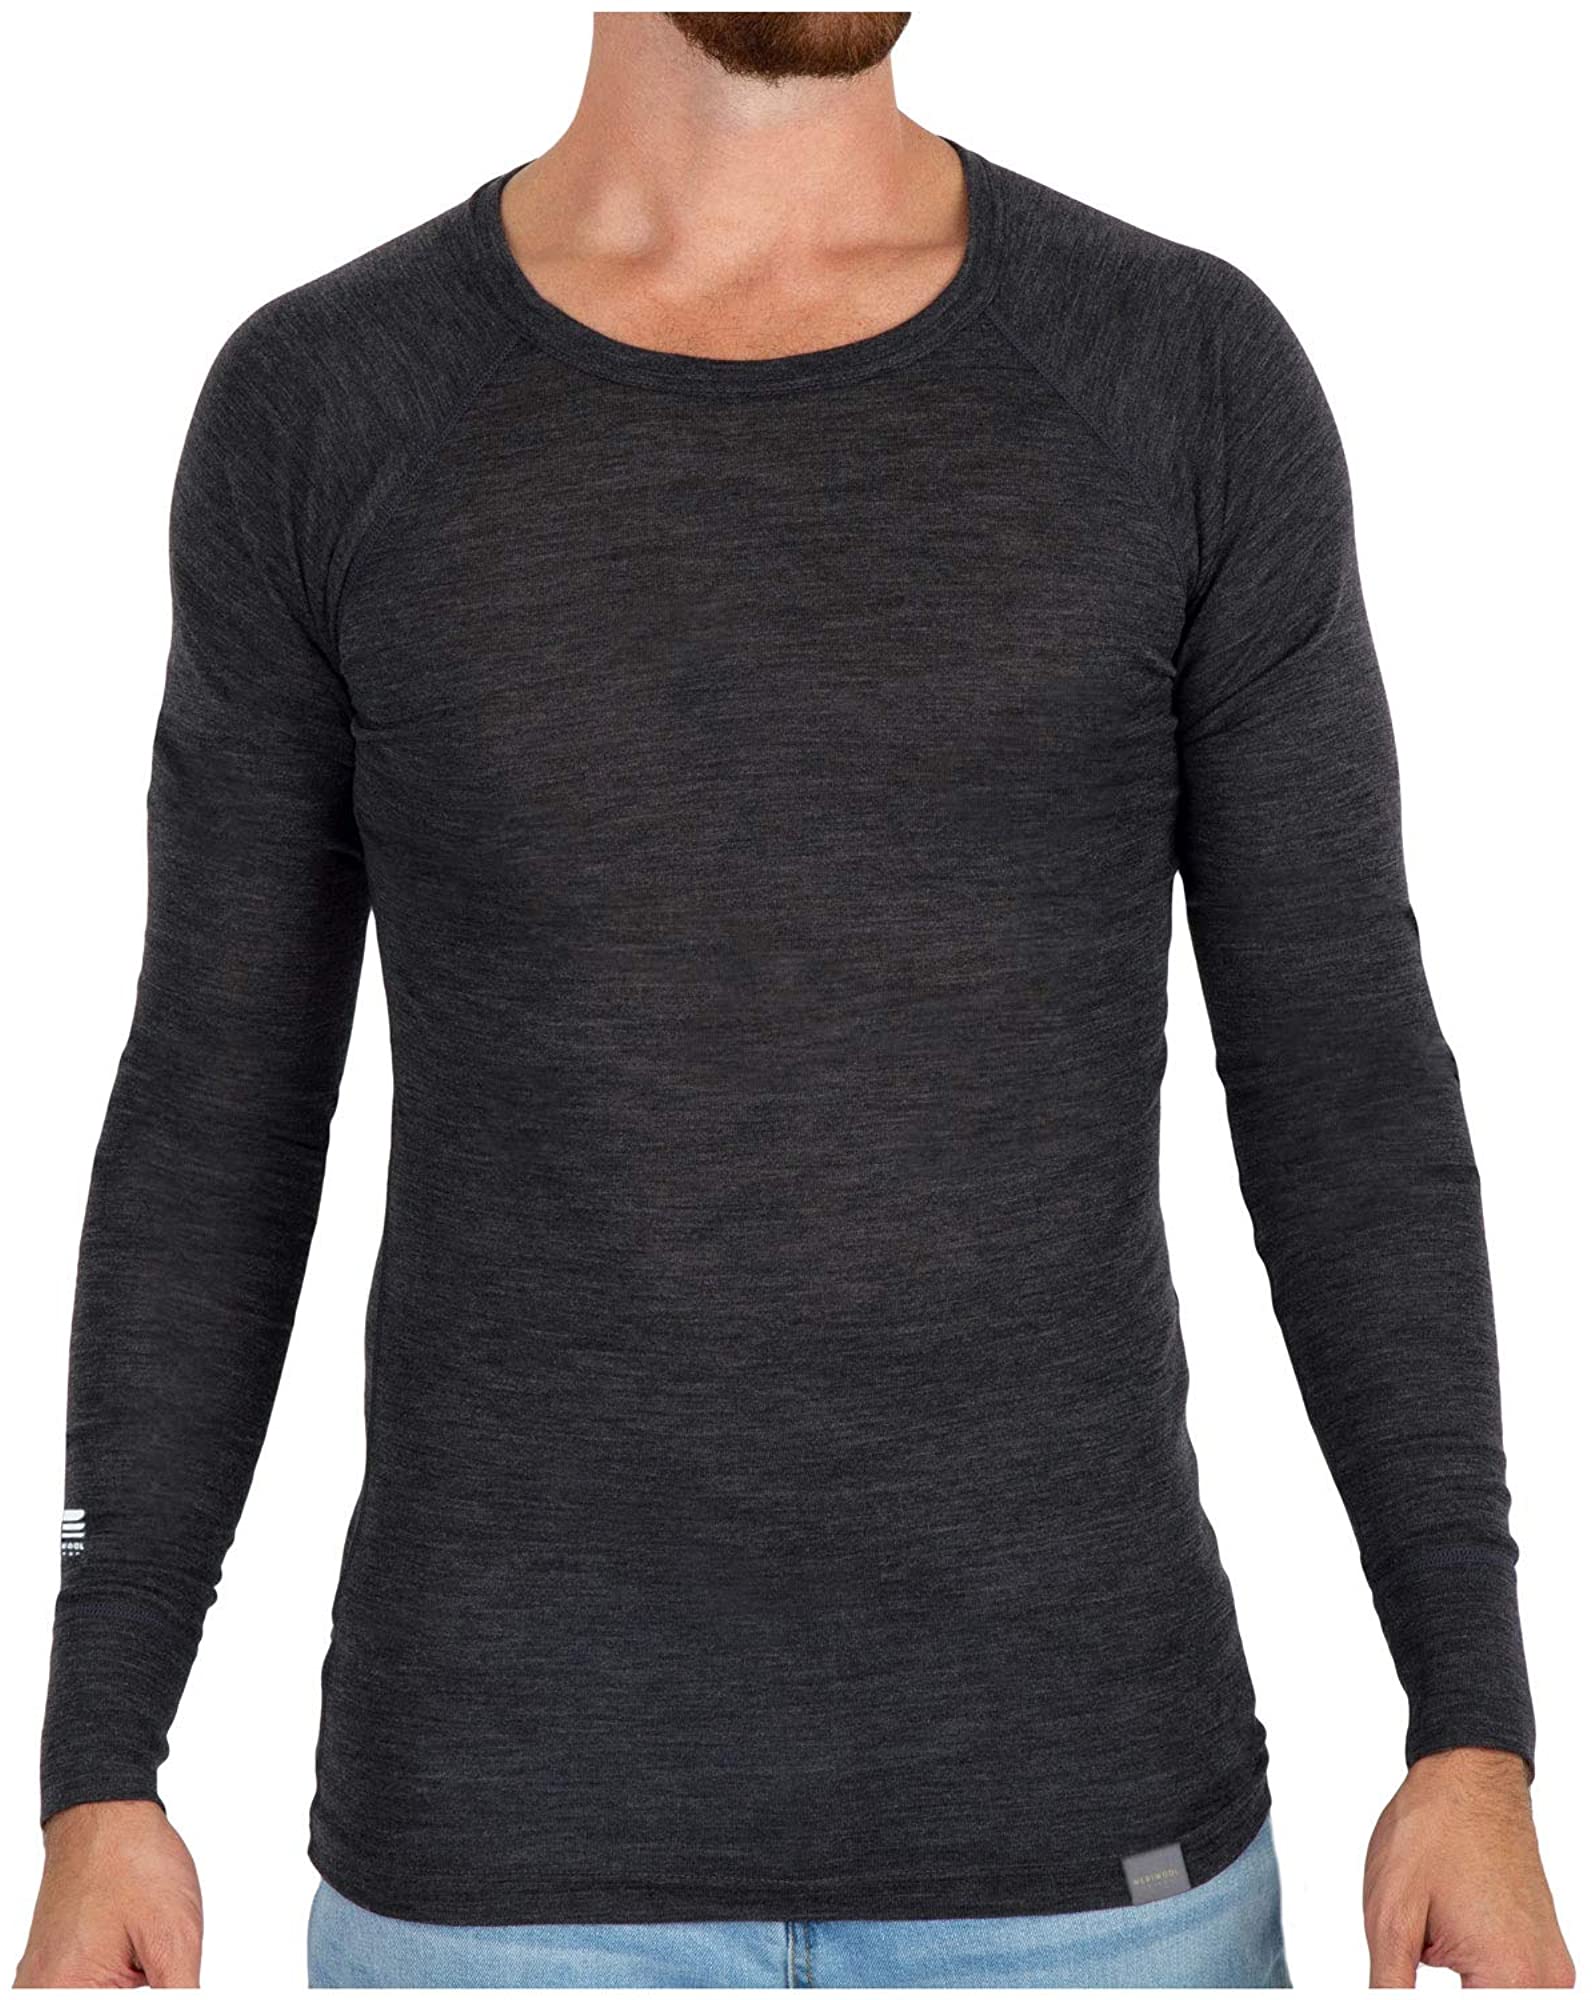 MERIWOOL Mens Base Layer 100 Merino Wool Lightweight Form Fit Top Thermal  Shirt